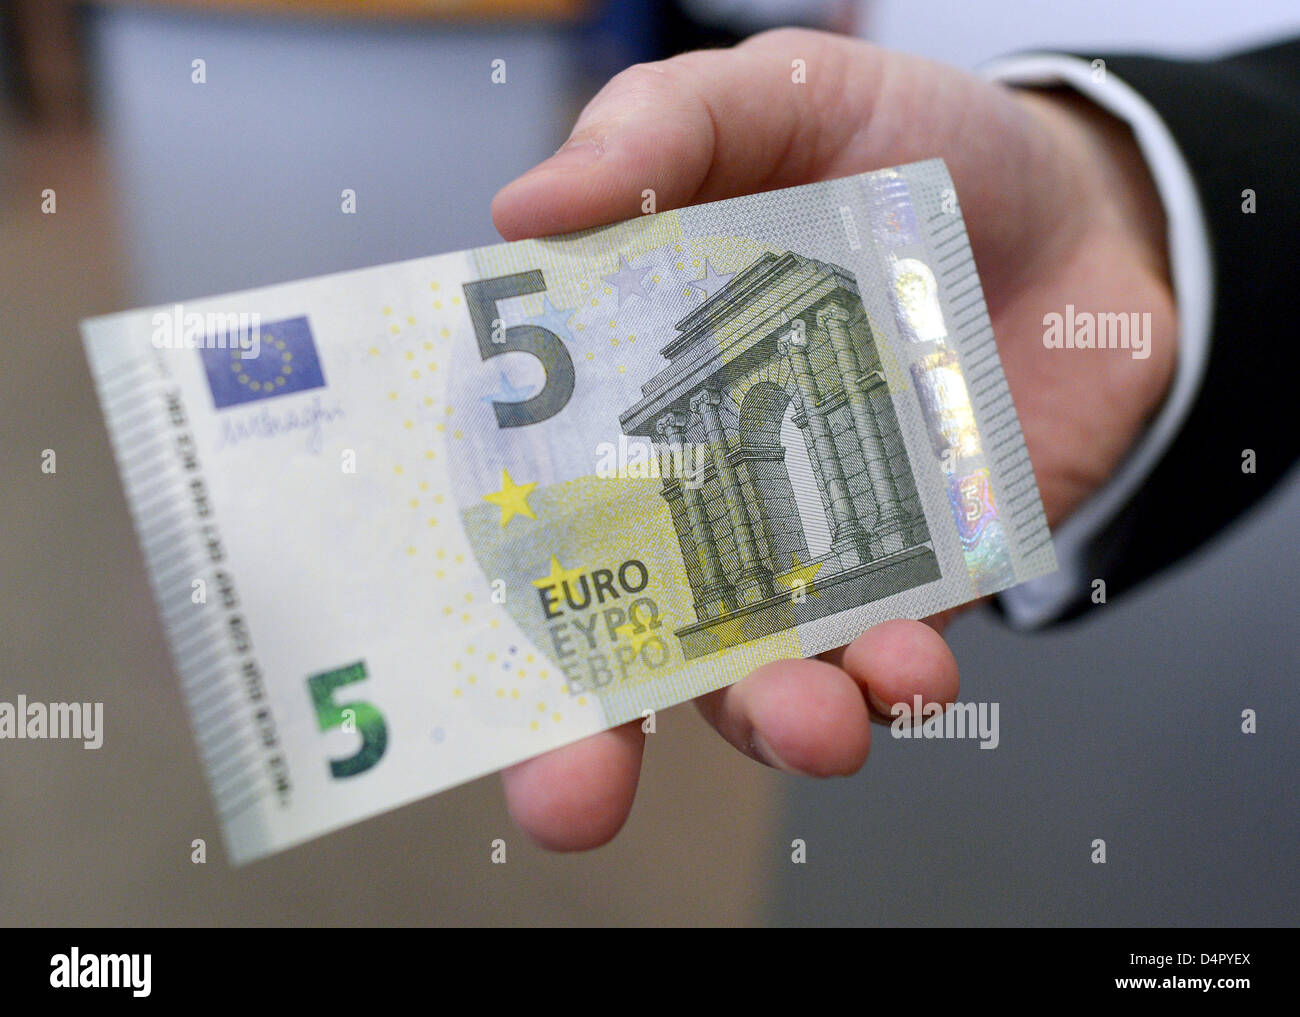 1 5 евро в рубли. 5 Евро купюра. 5 Евро банкноты евро. Купюра 5 евро новая. 5 Евро фото.